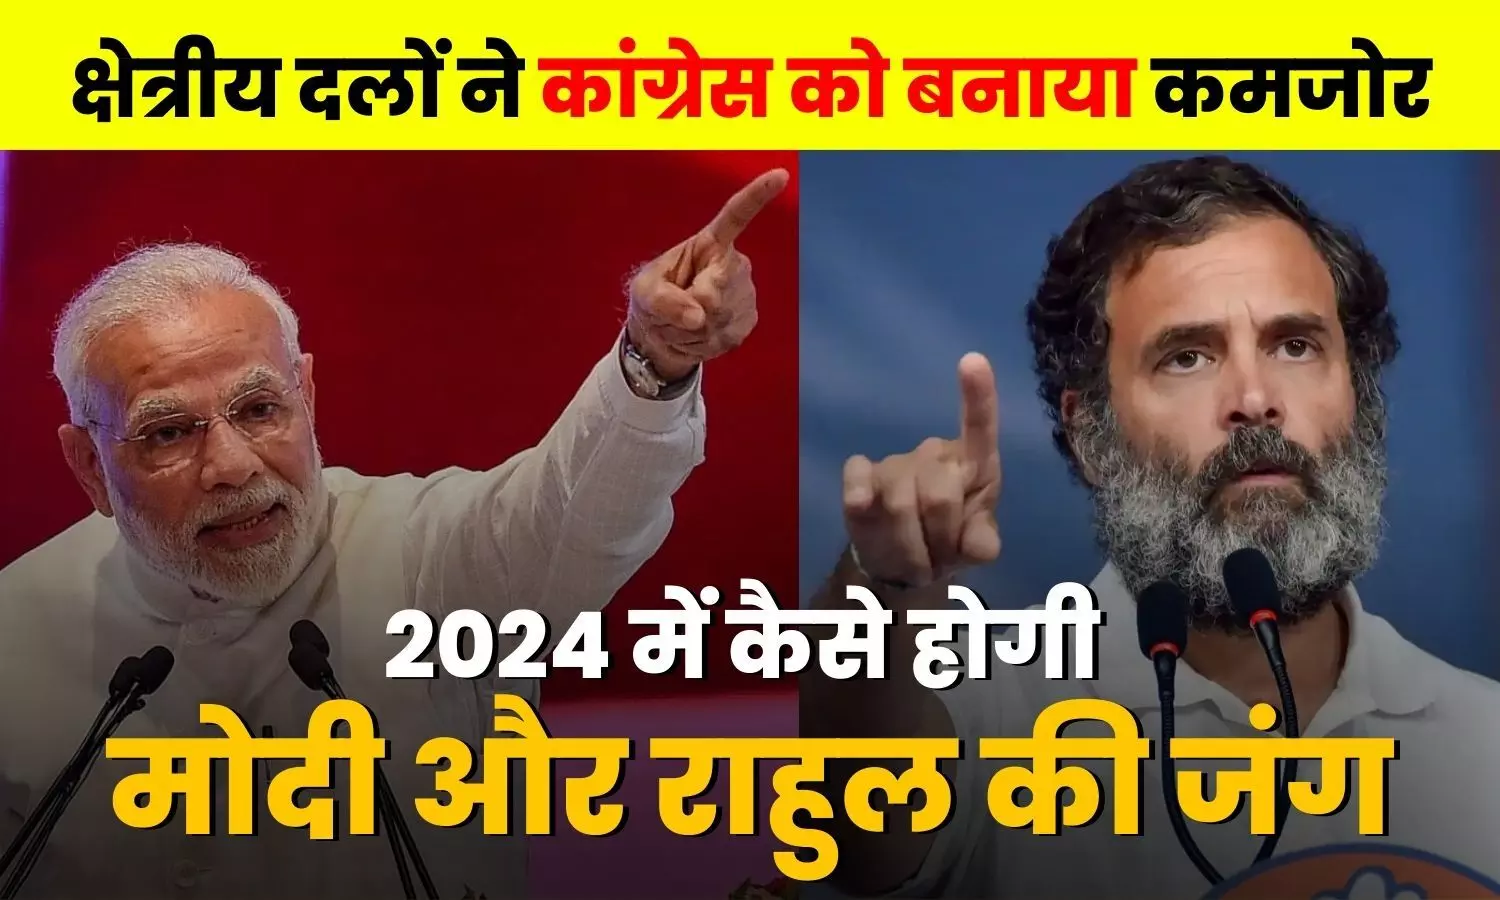 Narendra Modi vs Rahul Gandhi in Lok Sabha Election 2024